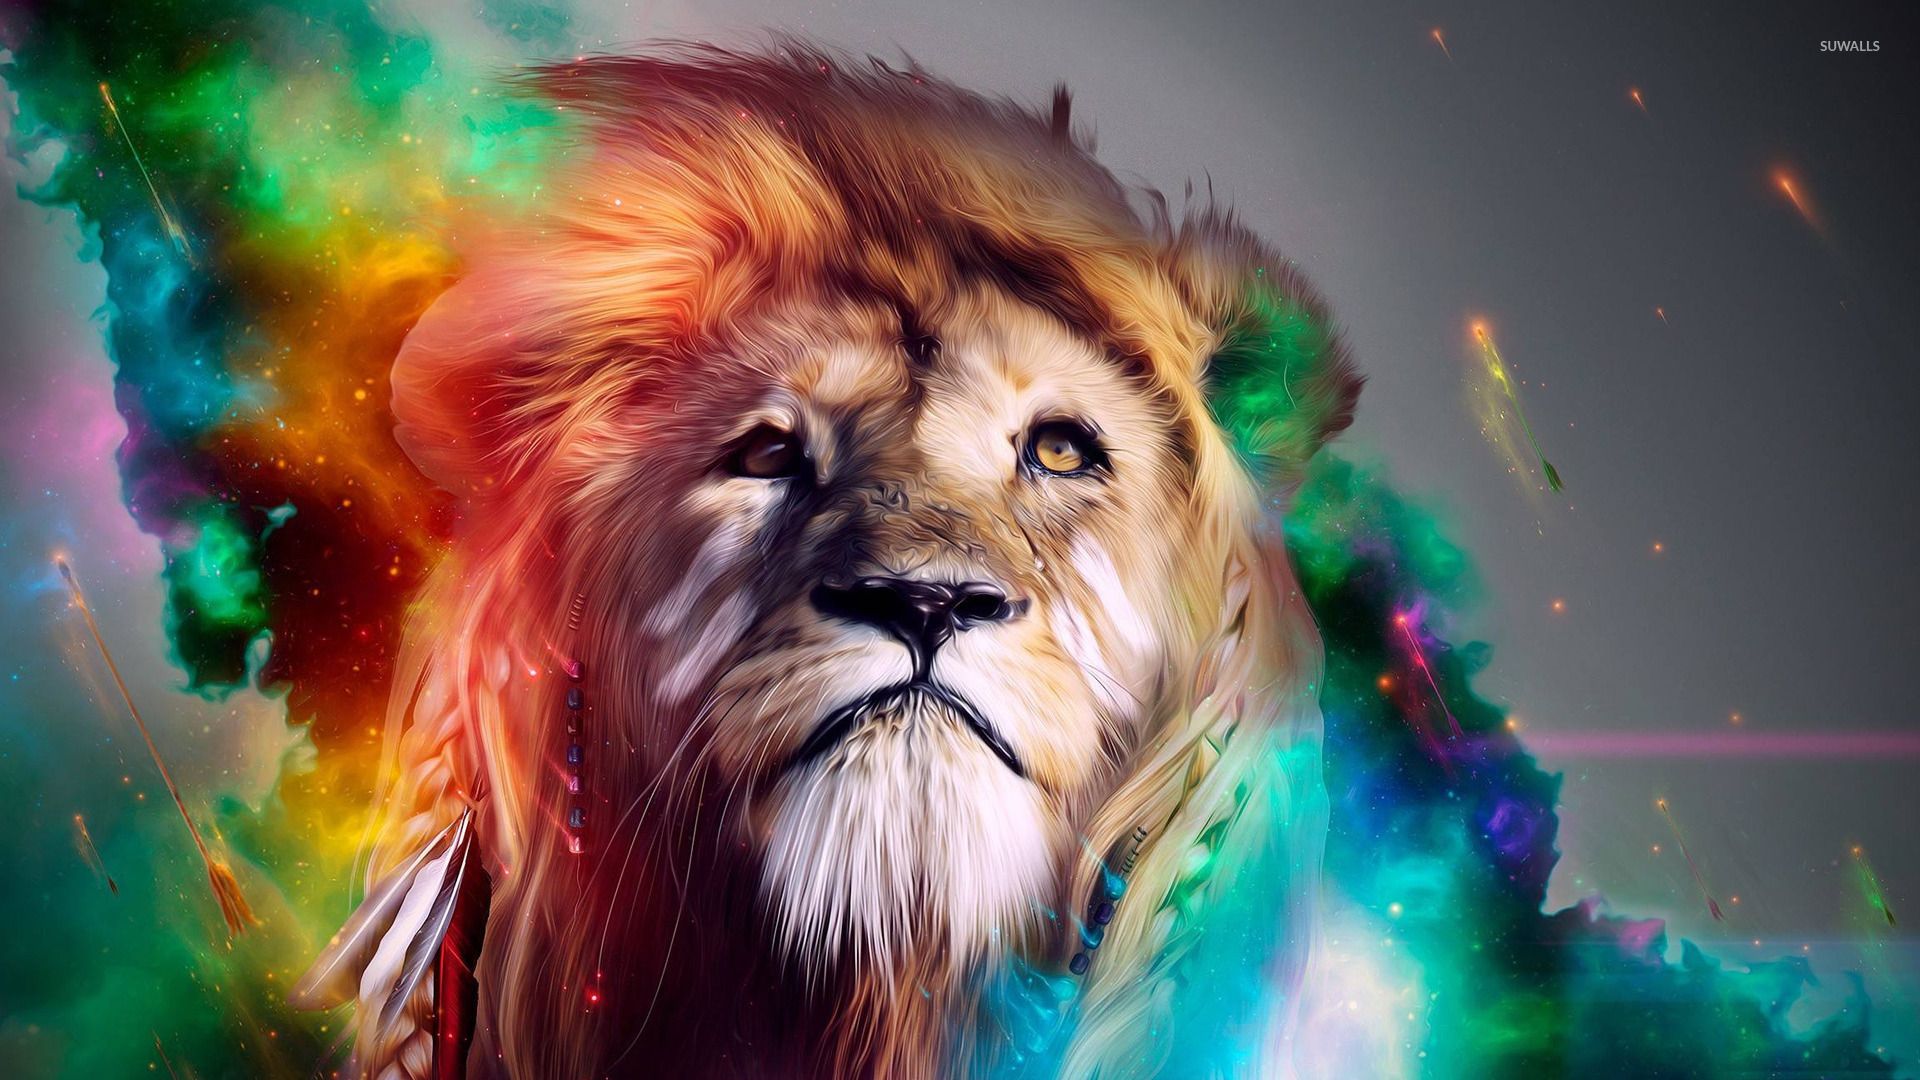 Rainbow Lion Wallpaper